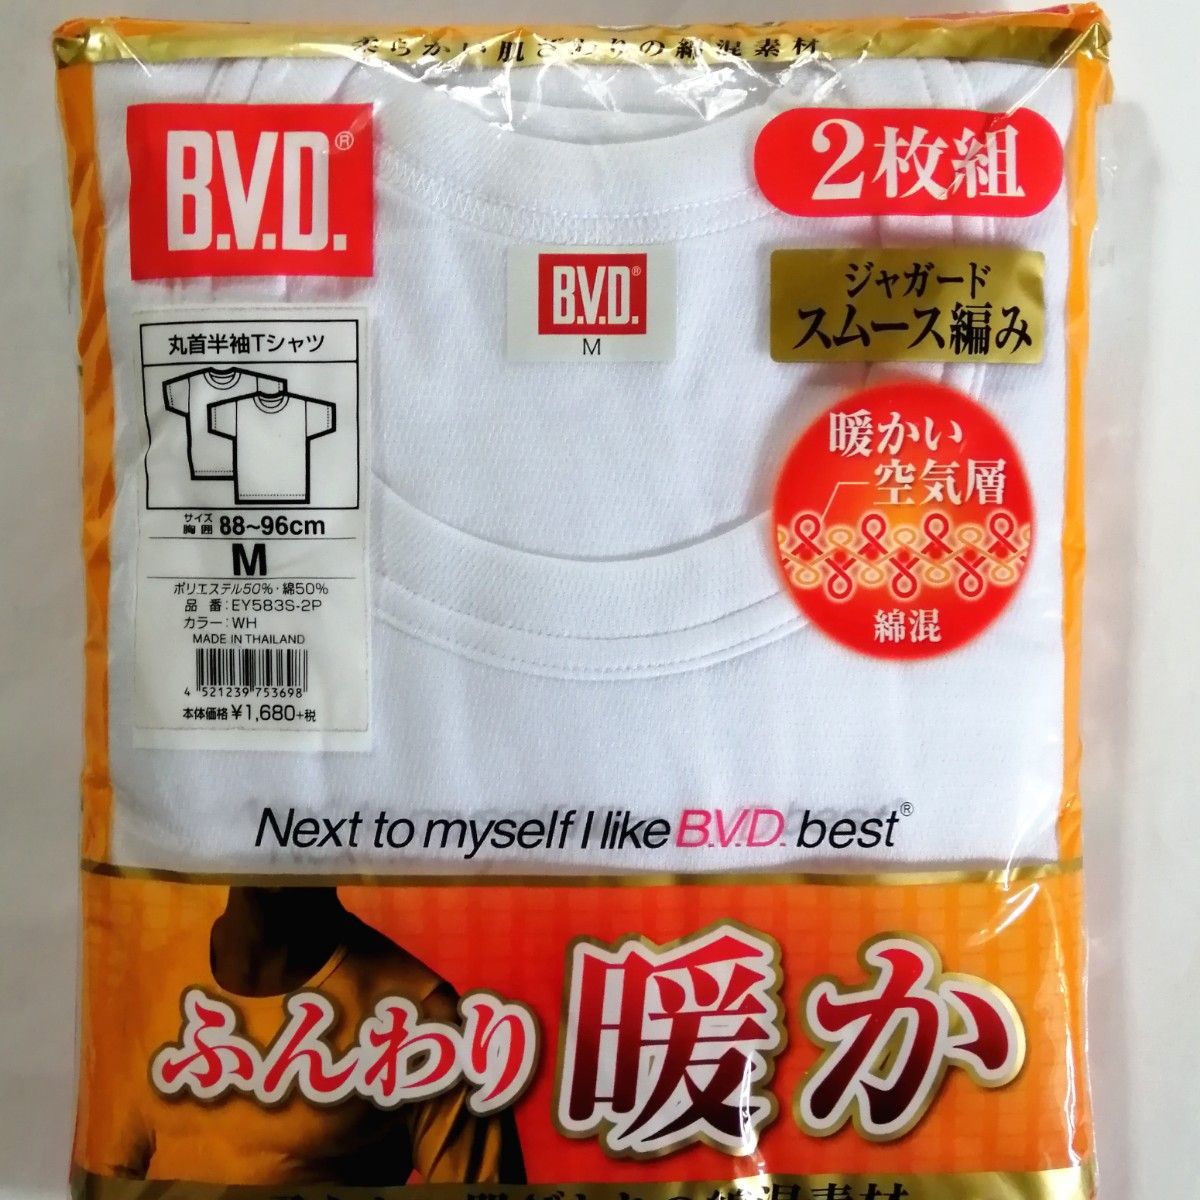 BVD 丸首半袖Tシャツ Mサイズ・2枚組 ☆柔らかい肌触りの綿混素材 ☆綿50%